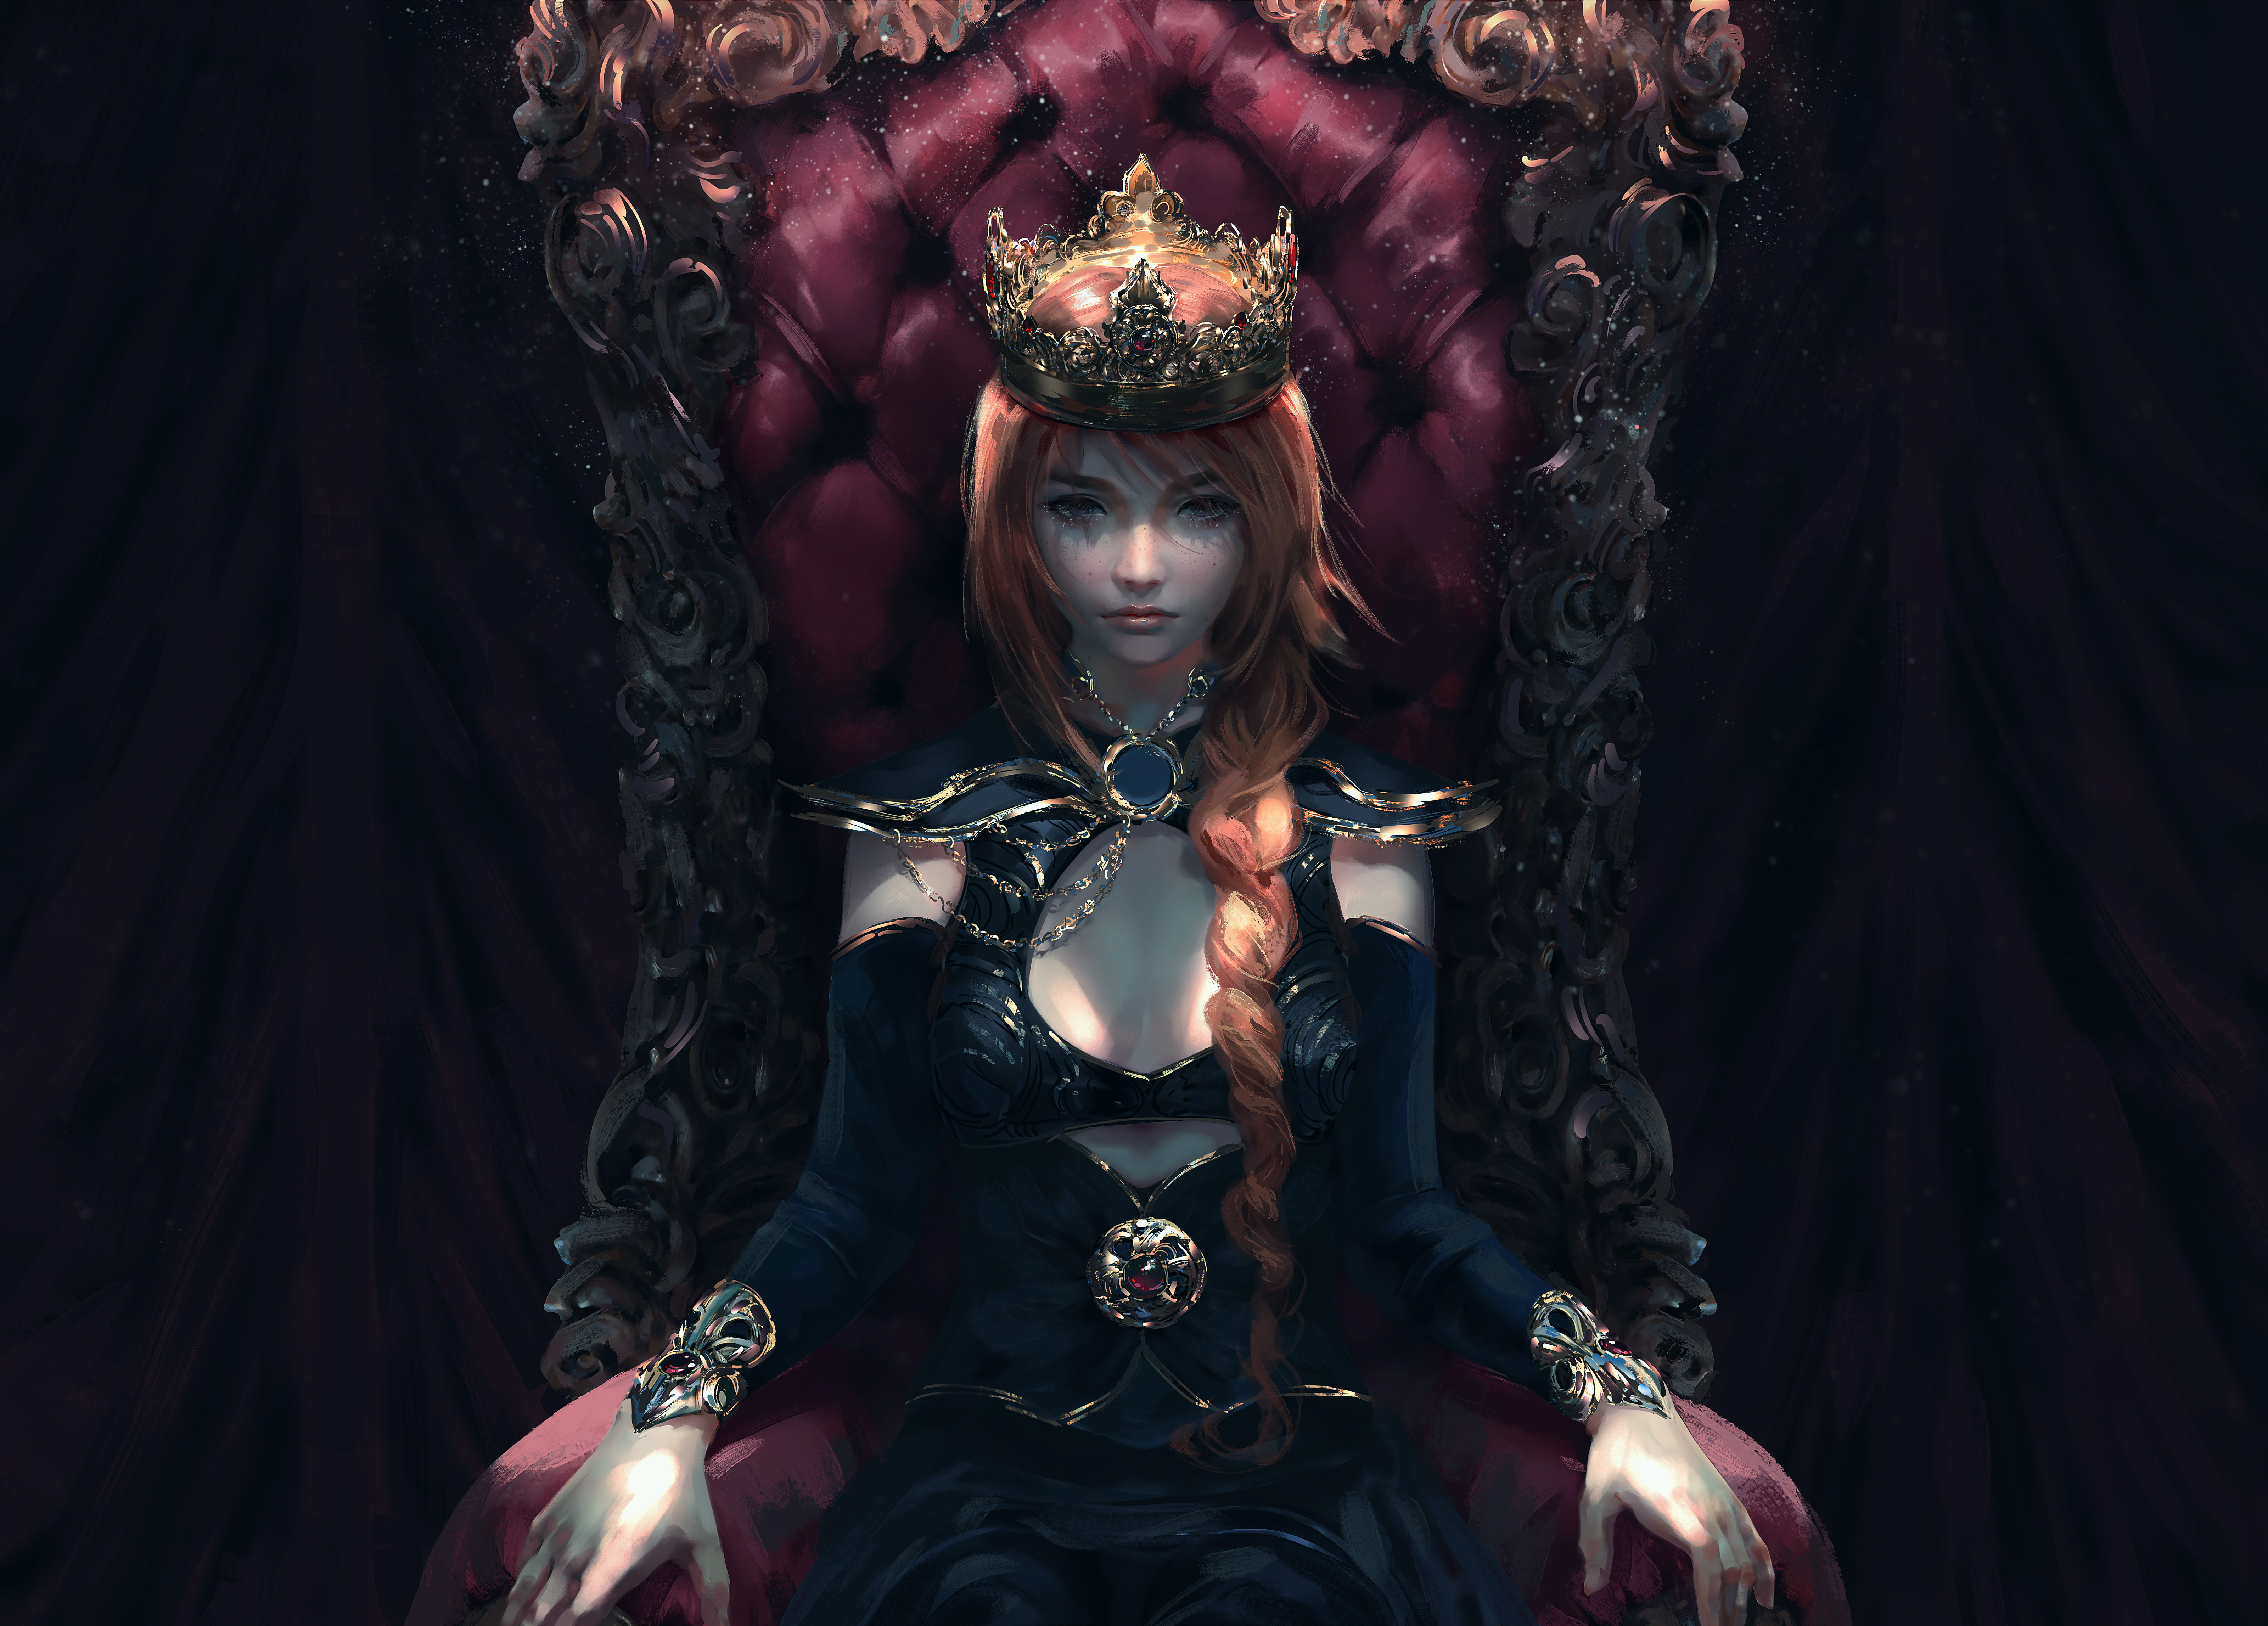 General 6400x4589 Nixeu digital art artwork illustration women sitting Queen (royalty) crown blonde long hair braids freckles couch looking at viewer dress